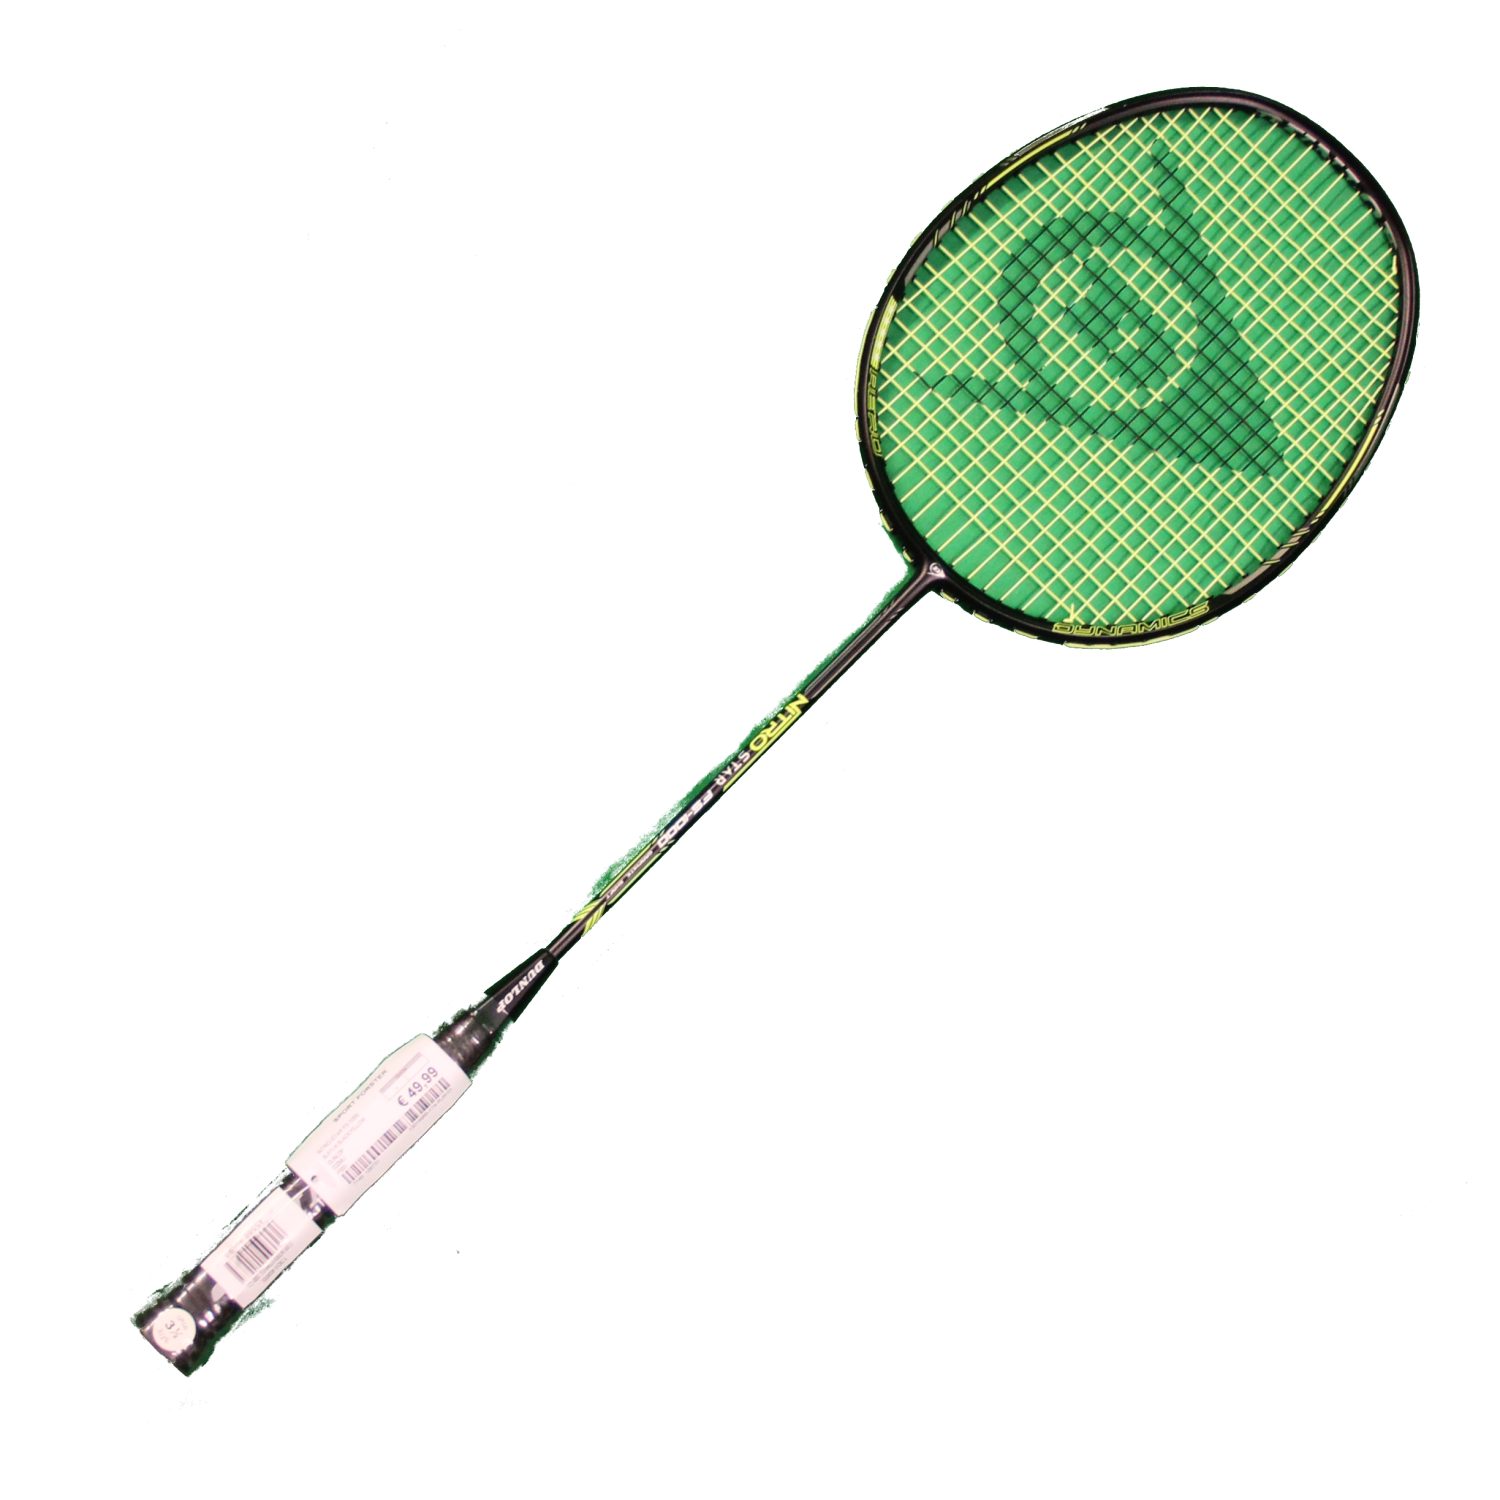 Dunlop Badmintonschläger Dunlop Nitro Star FS 1000 Badmintonschläger